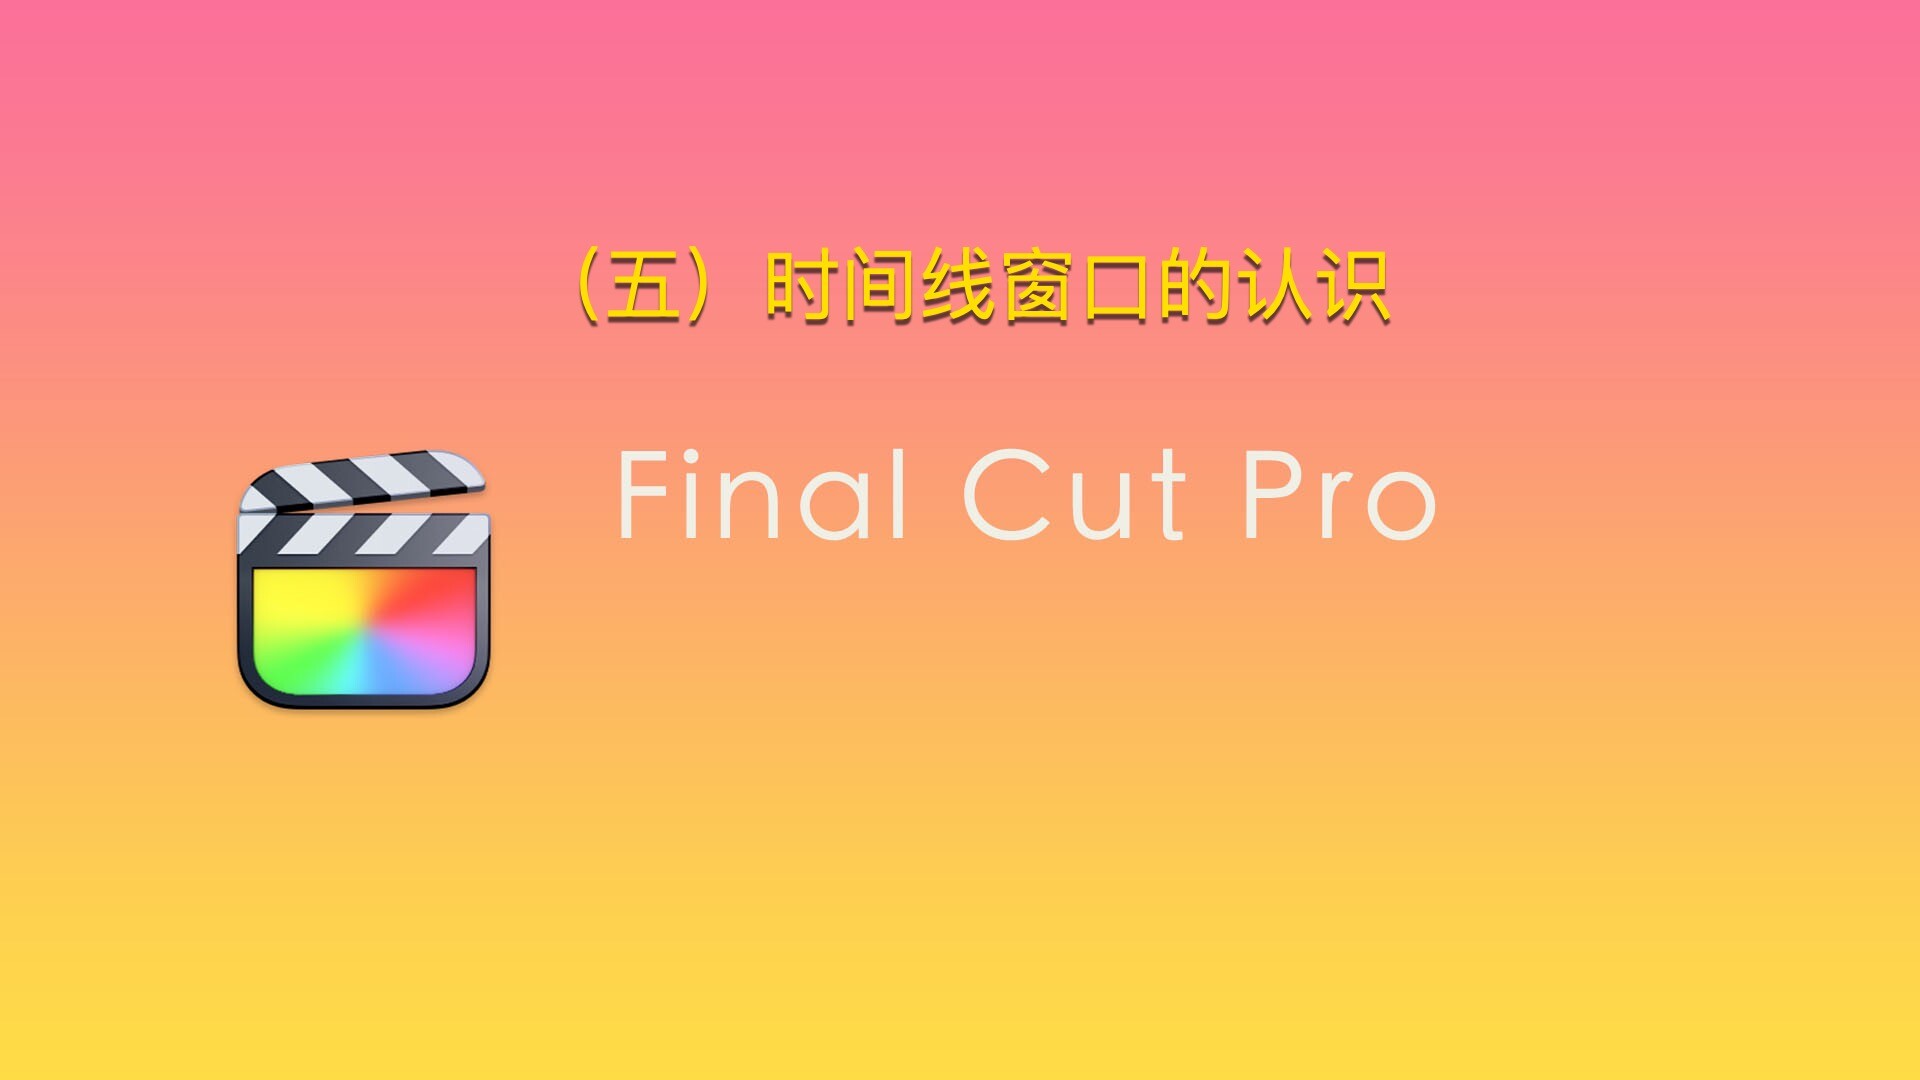 Final Cut Pro中文新手教程 (5) 时间线窗口的认识